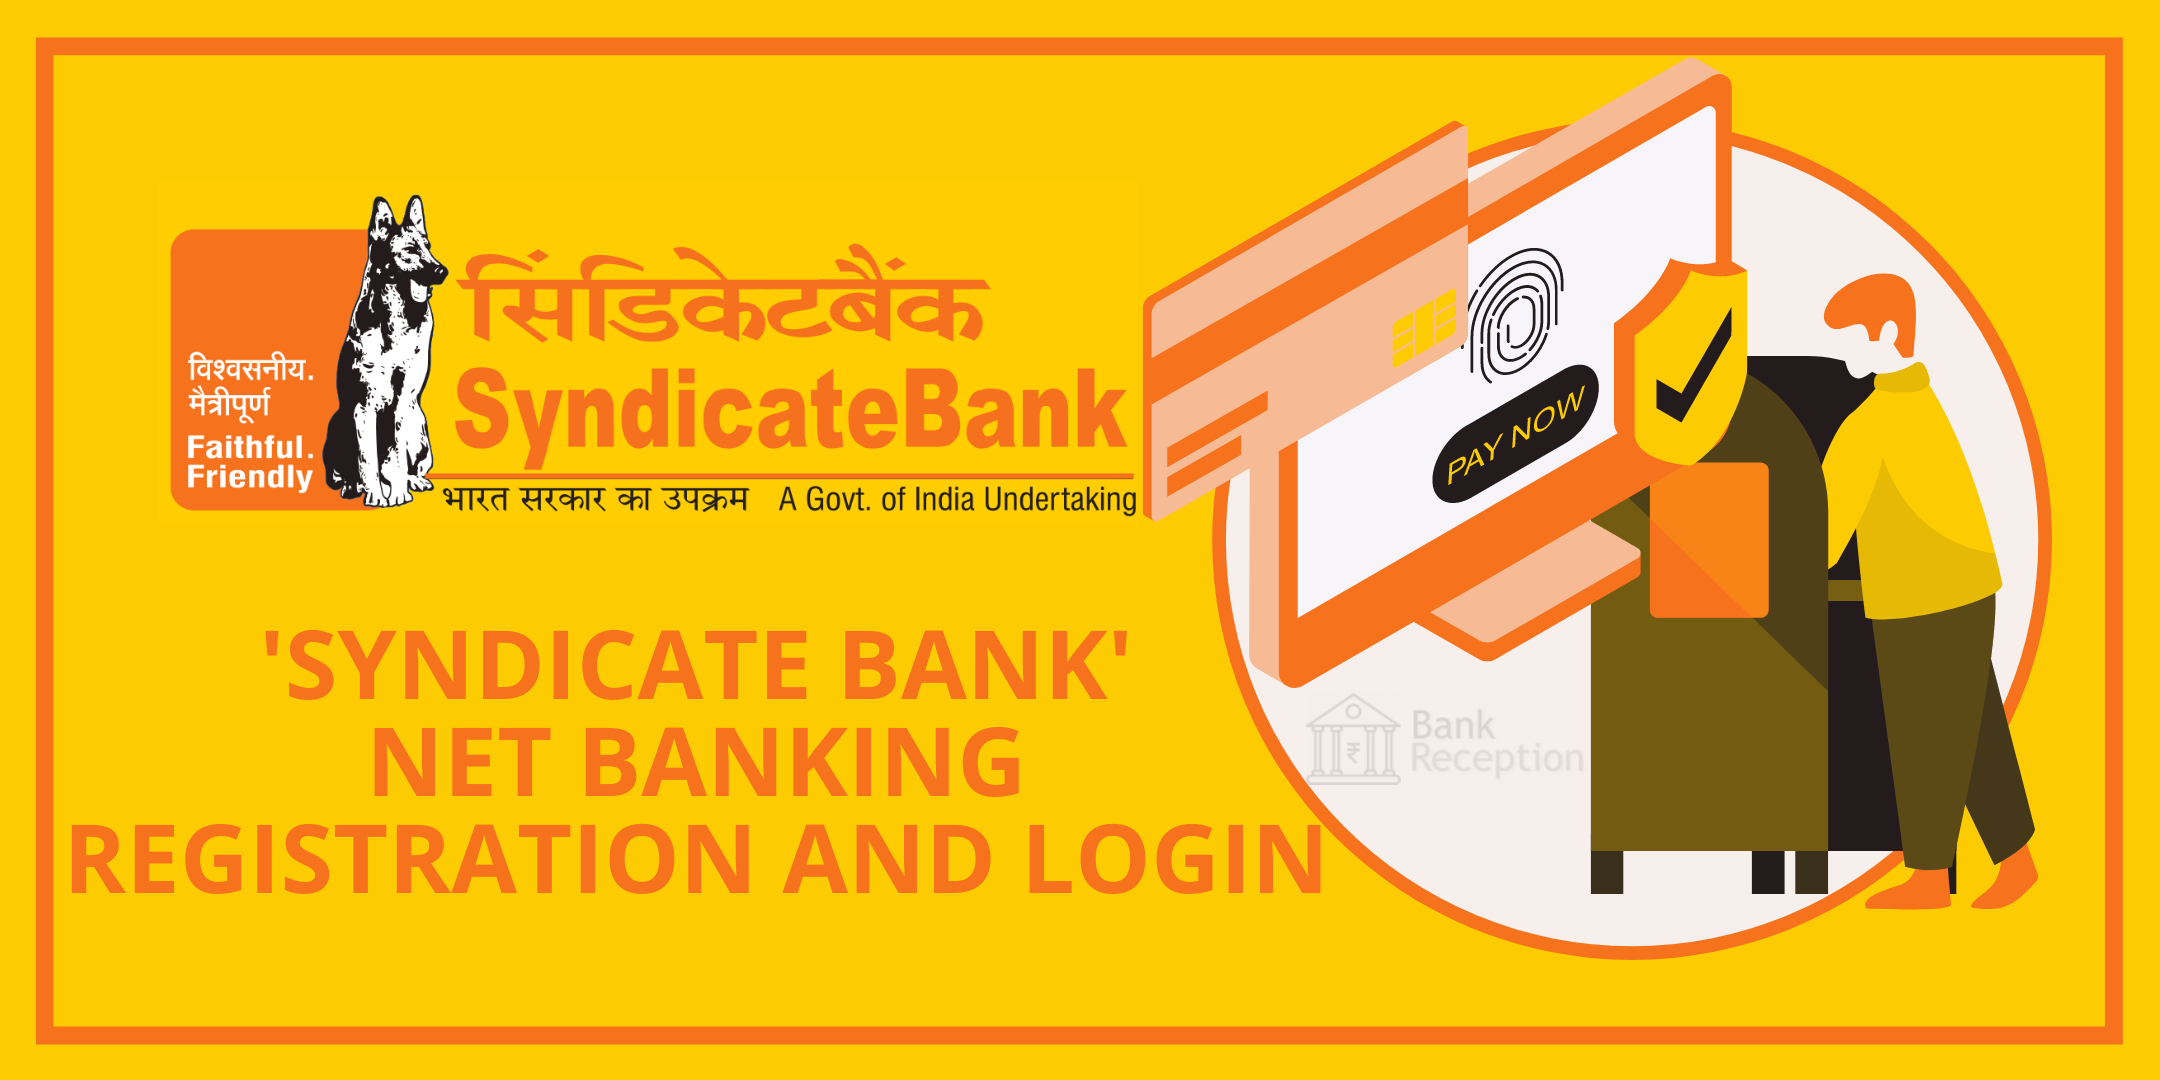 Syndicate bank net banking registration bankreception